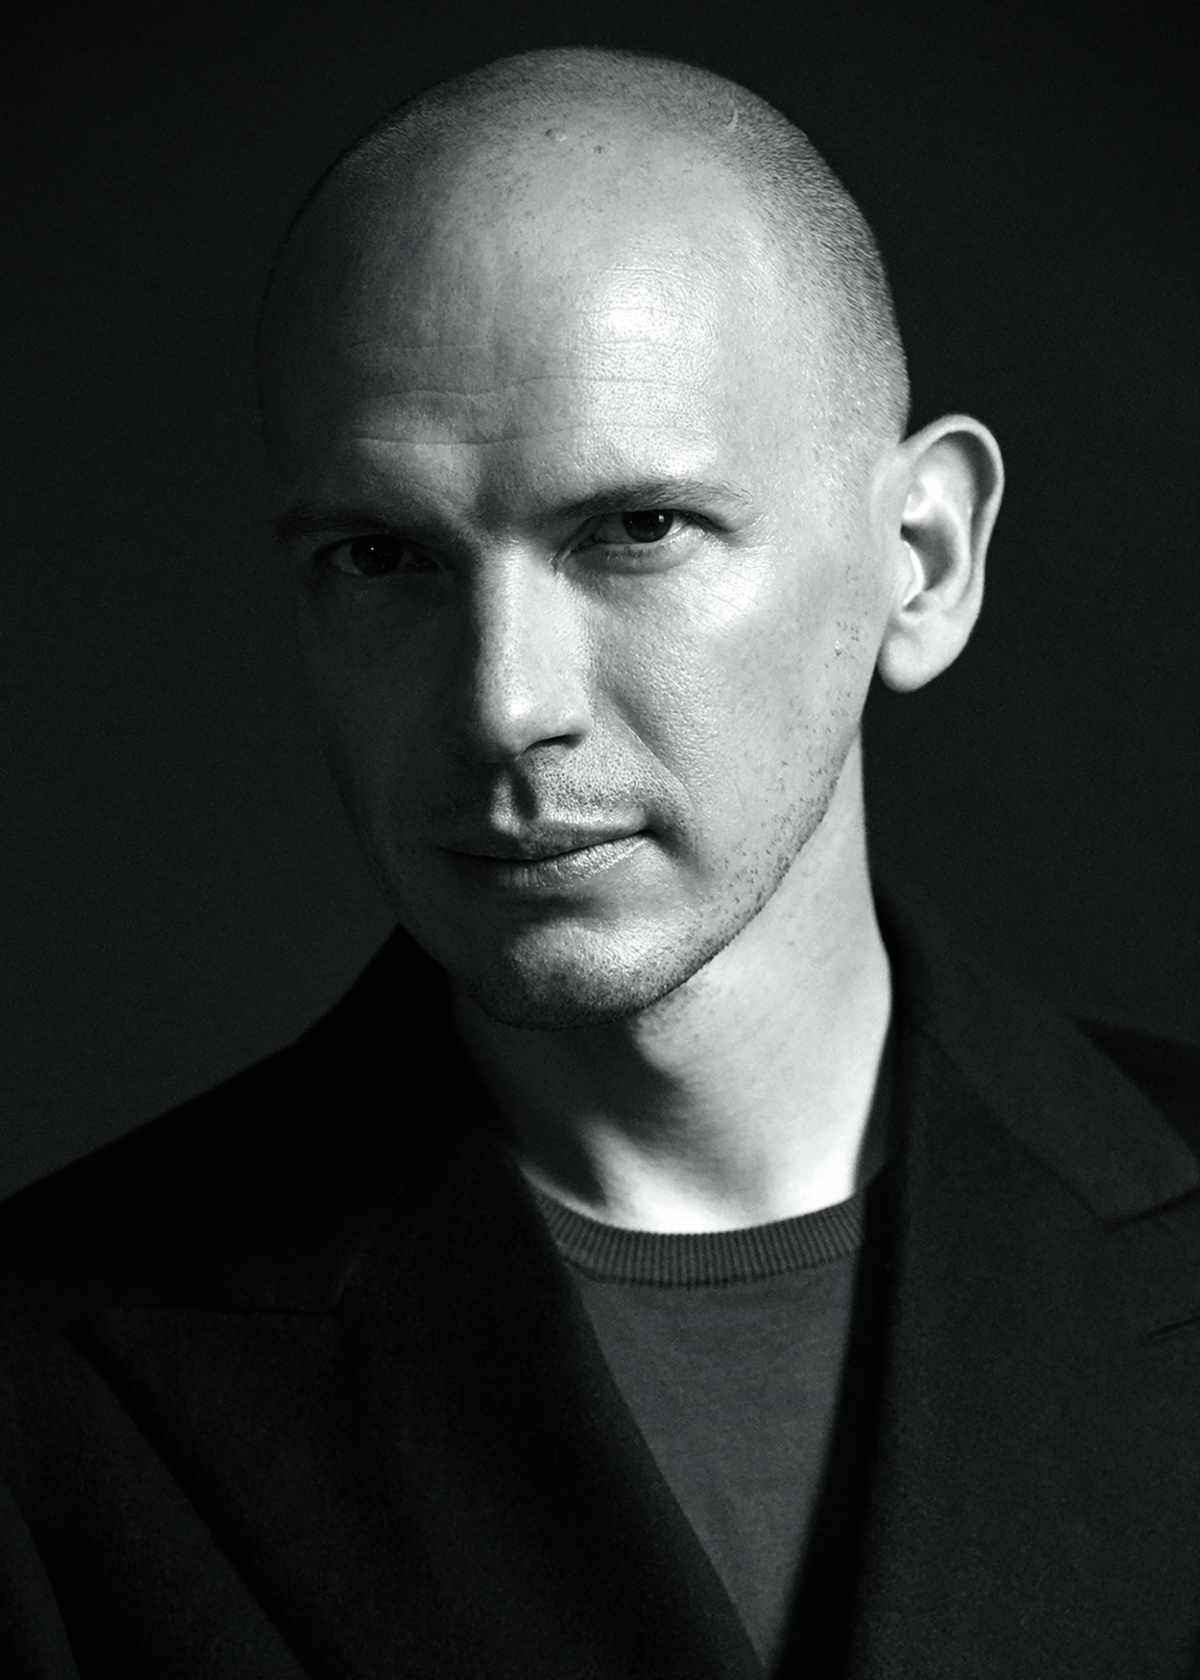 A bald man wearing a black t-shirt and blazer